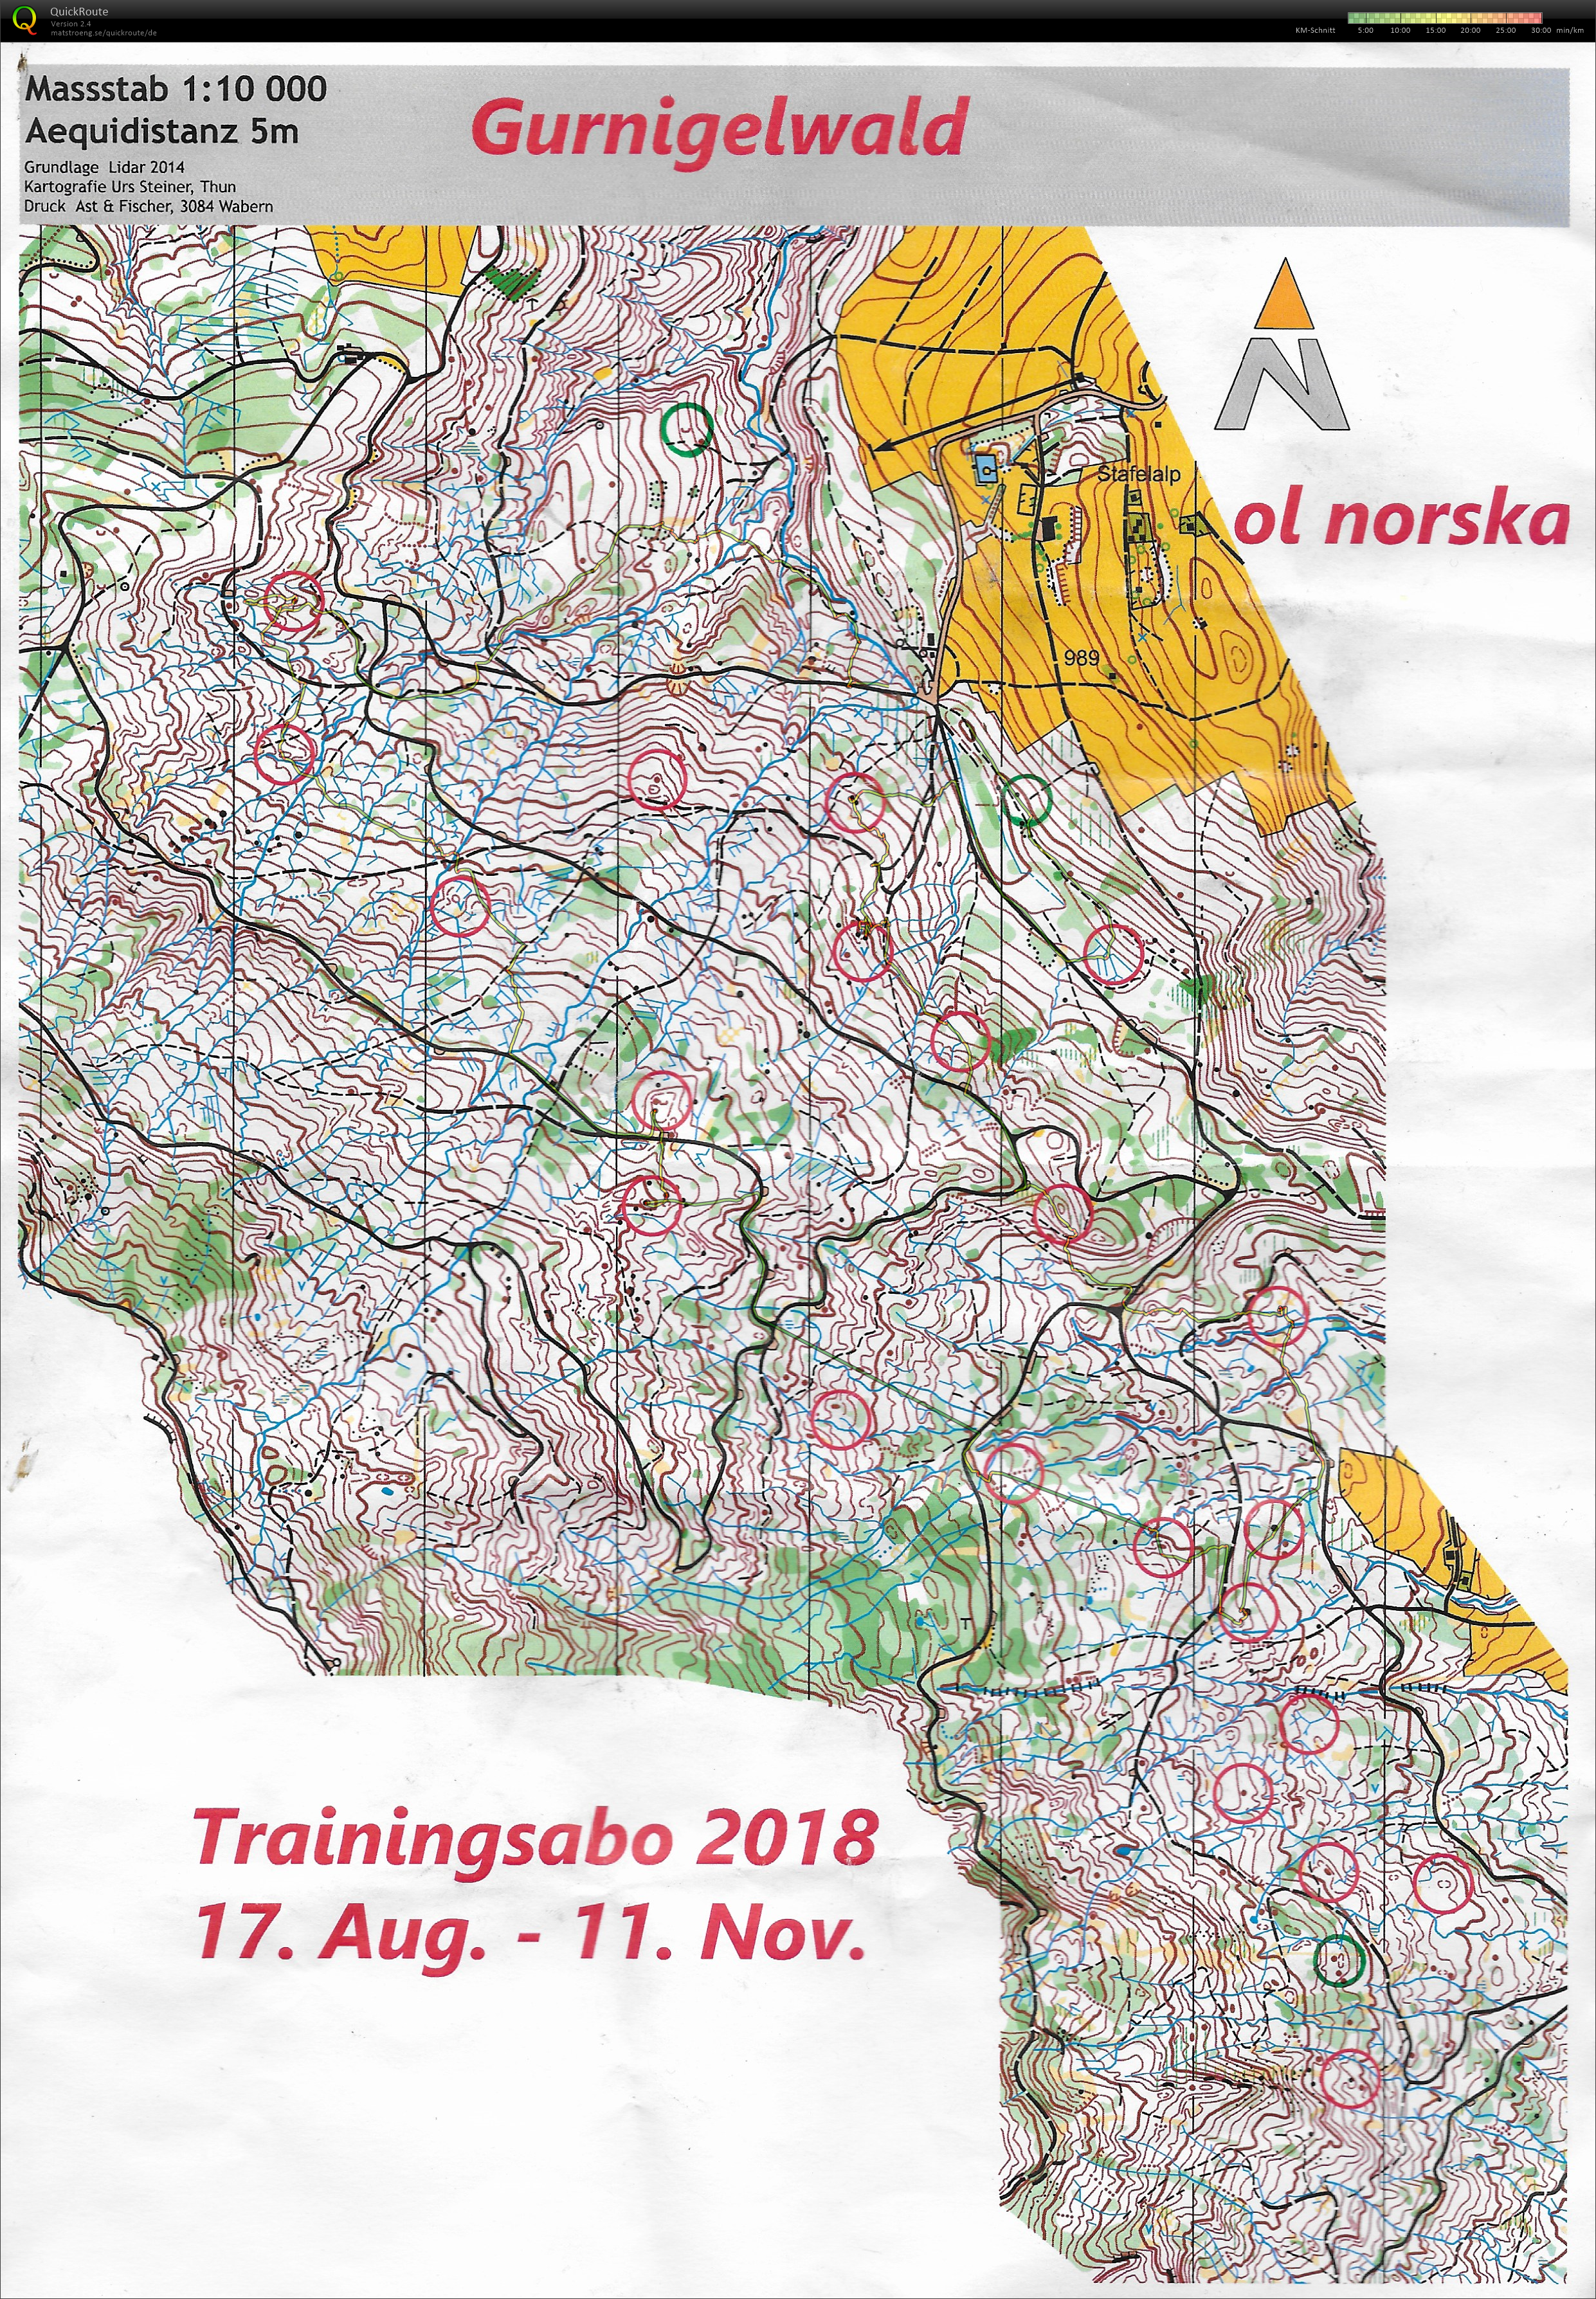 Trainingsabo Gurnigelwald (02-09-2018)